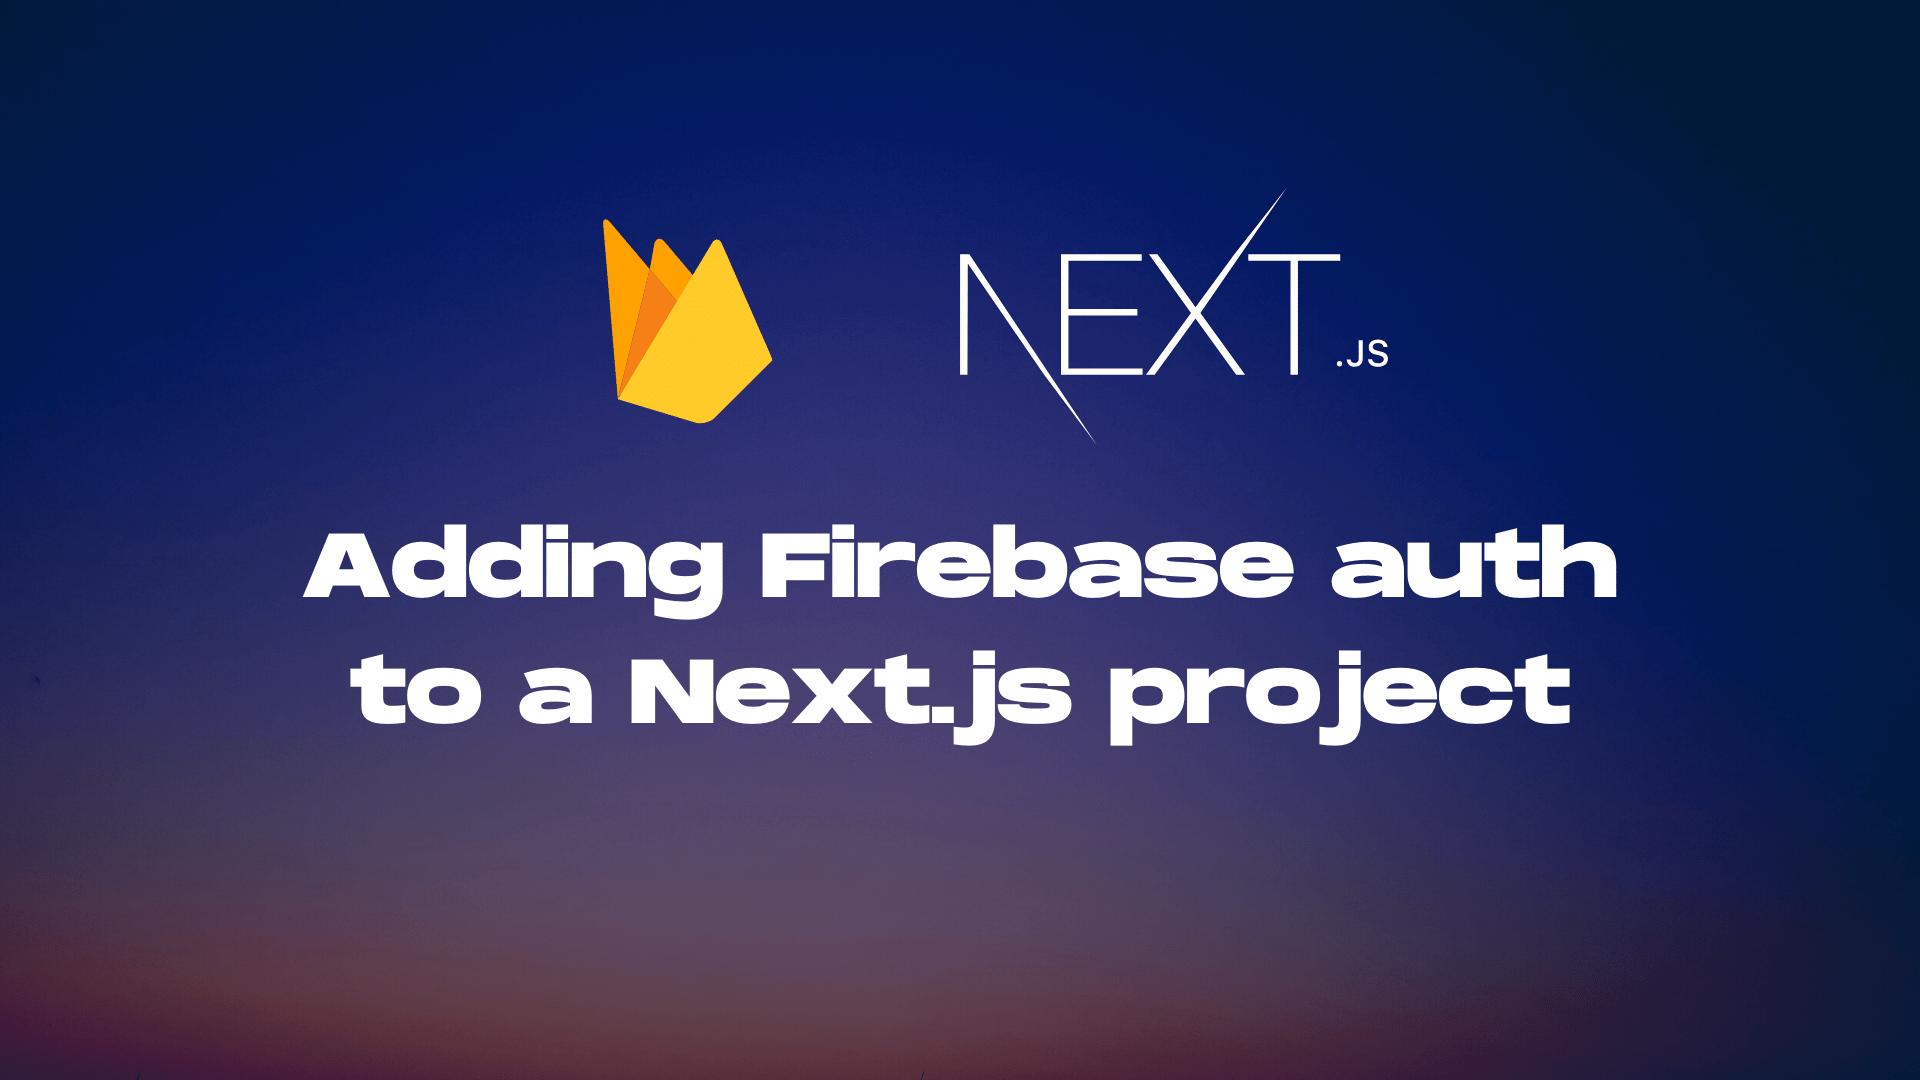 Adding Firebase authentication to a Next.js app